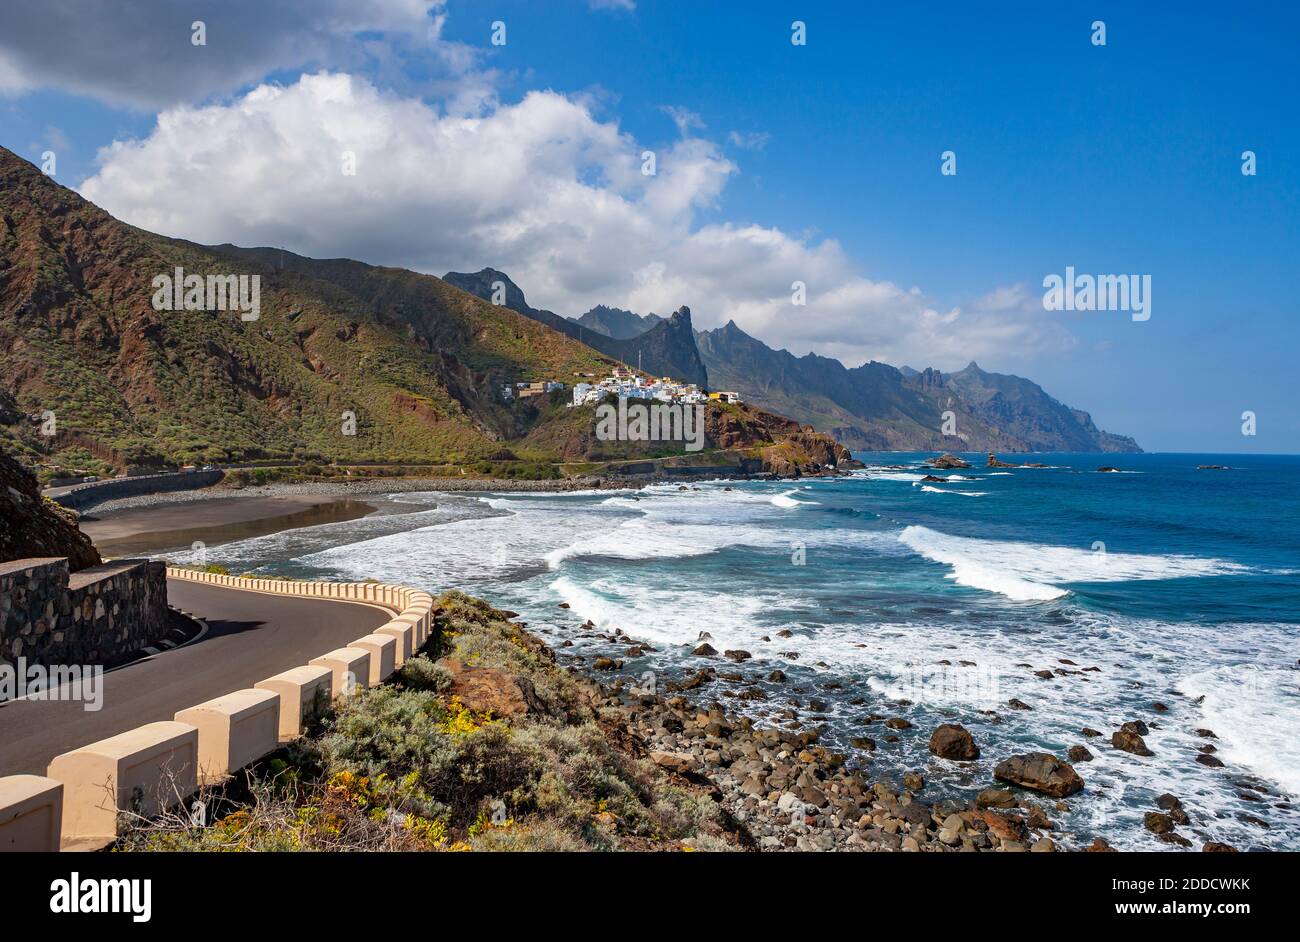 Spain, Province of Santa Cruz de Tenerife, Almaciga, Highway stretching along rugged shore of Tenerife island Stock Photo